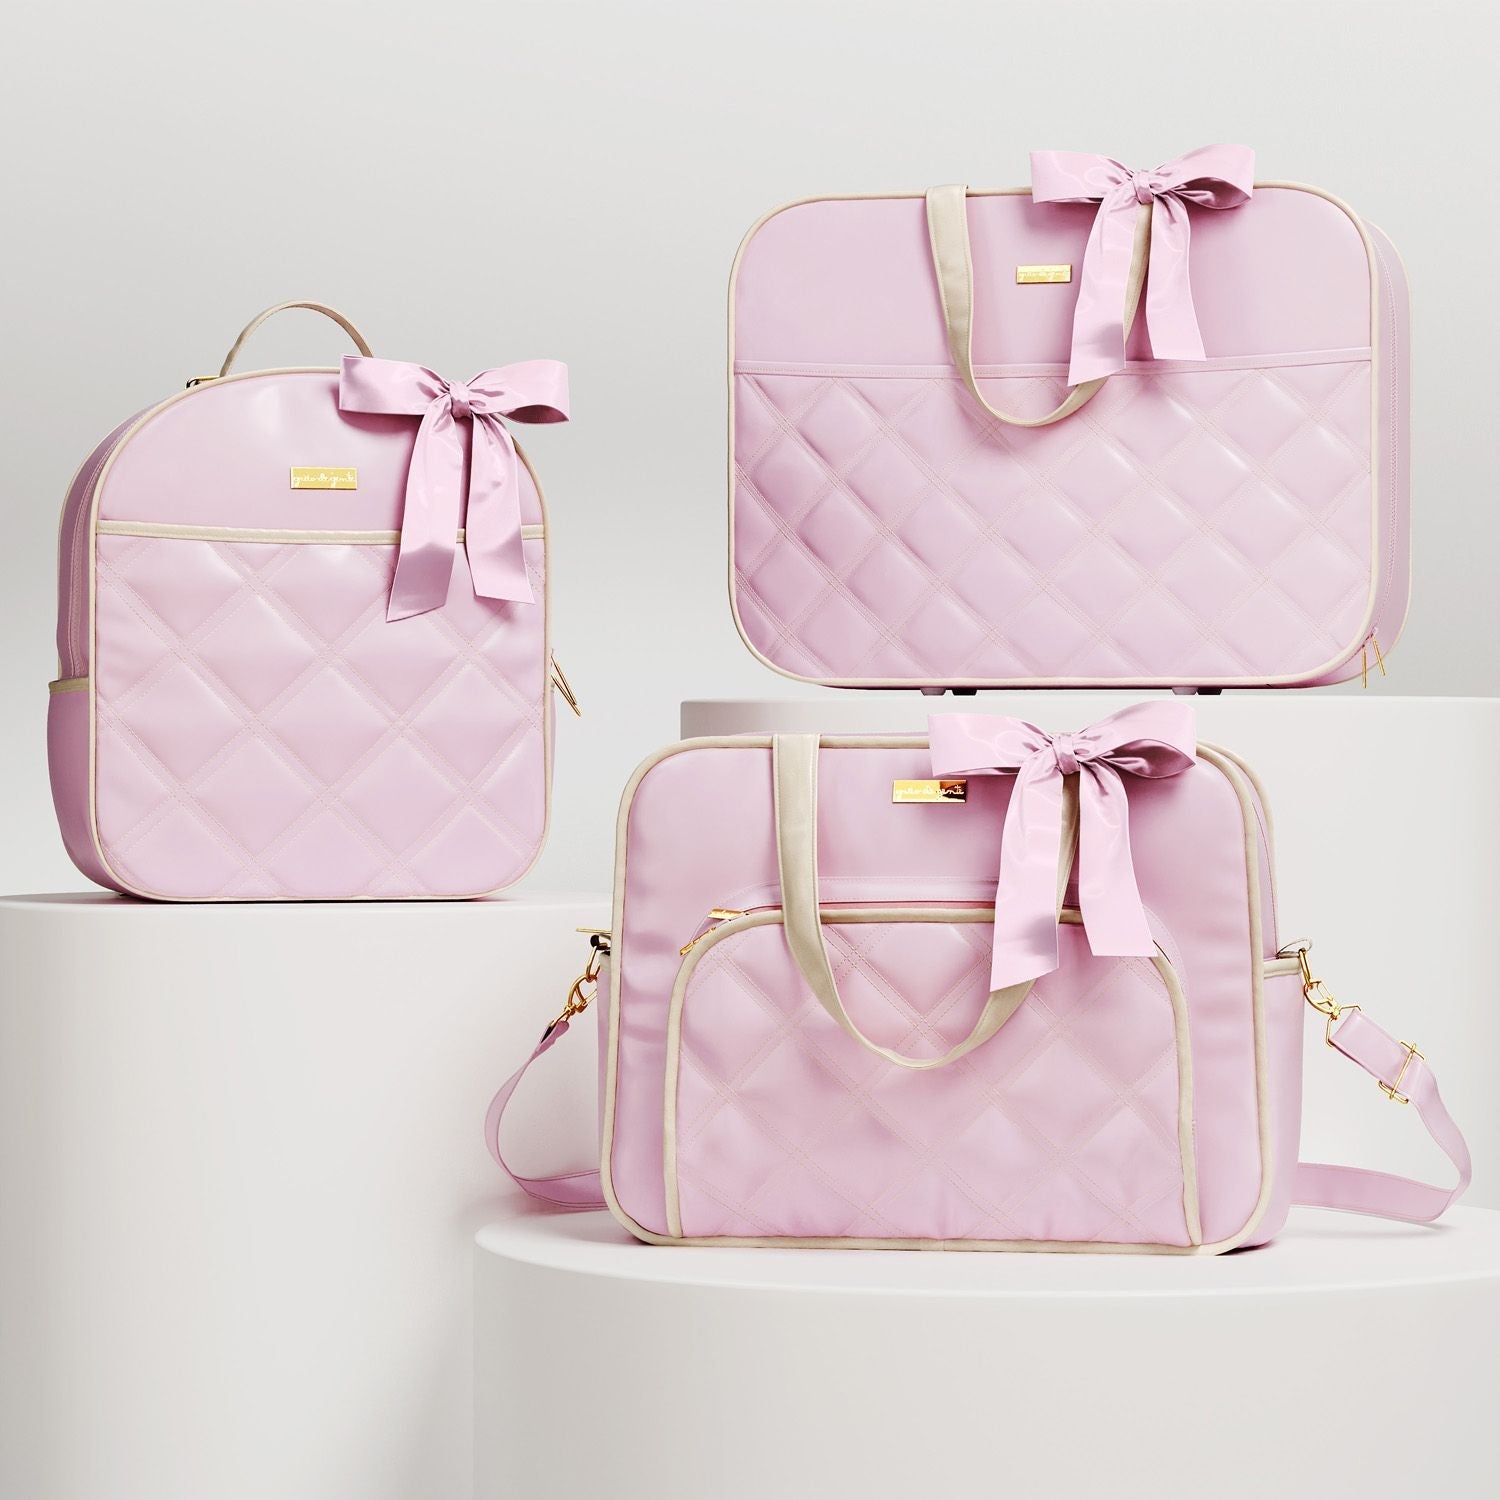 3 Piece Pink and Beige Luxury Diaper Bag Set